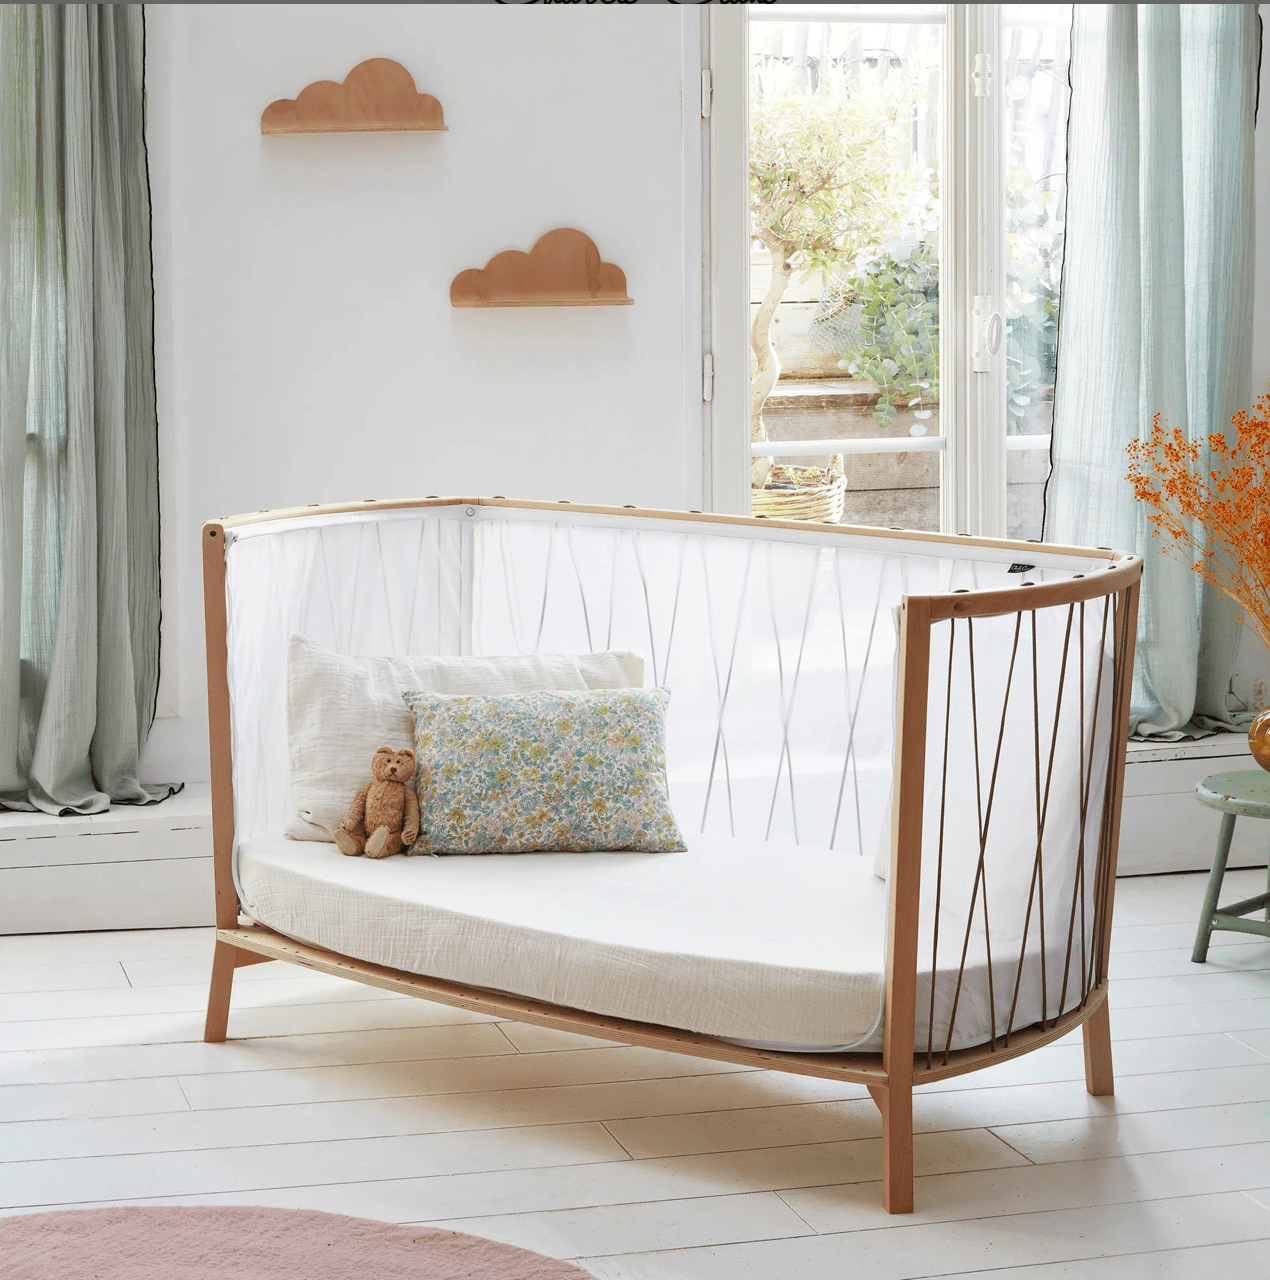 Charlie Crane KIMI Baby Bed, en del av kategorien Furniture - At Home Interiør